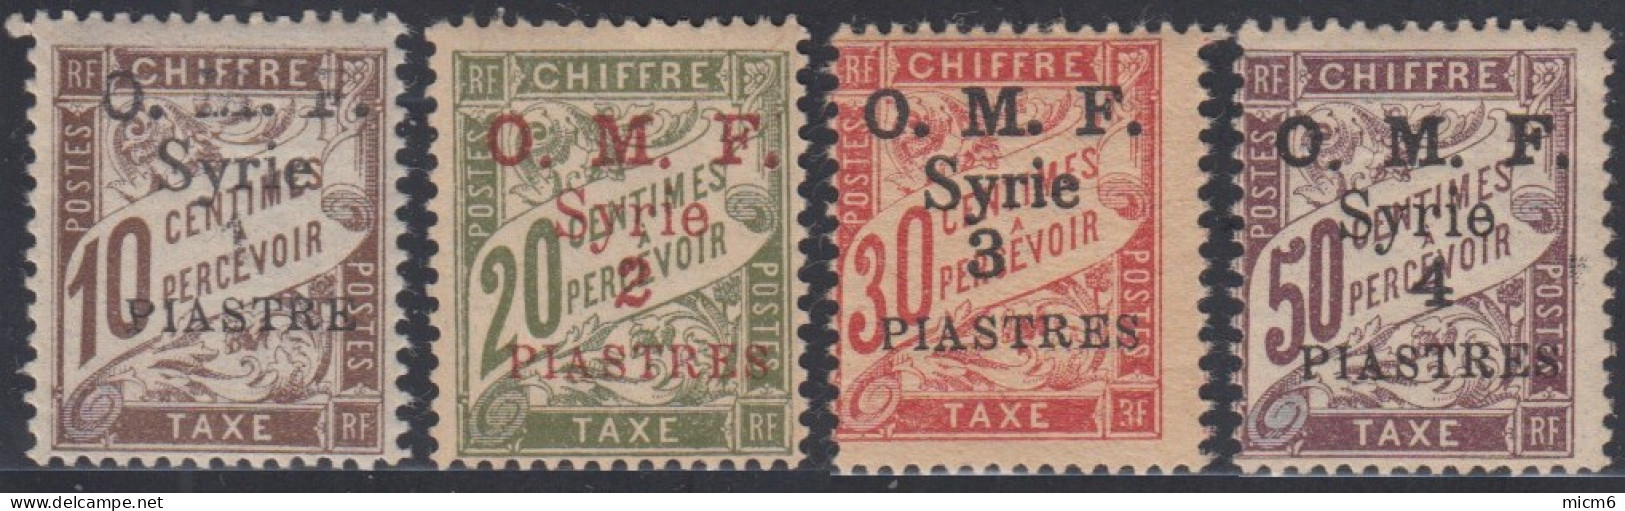 Syrie 1919-1922 (Occupation Française) - Timbres-taxe N° 05 à 8 (YT) N° 5 à 8 (AM) Neufs **. - Postage Due